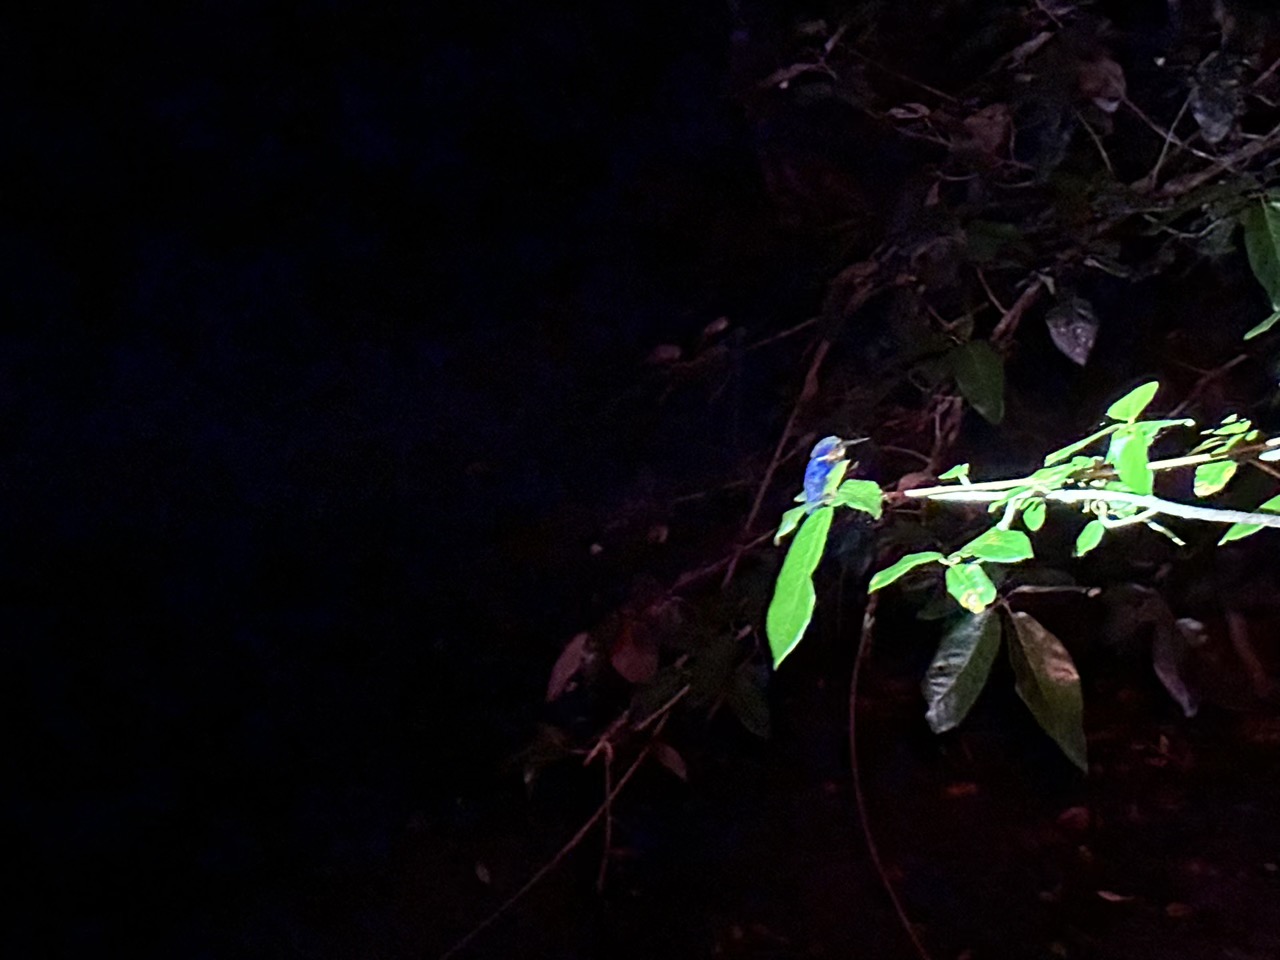 A kingfisher sleeping at night